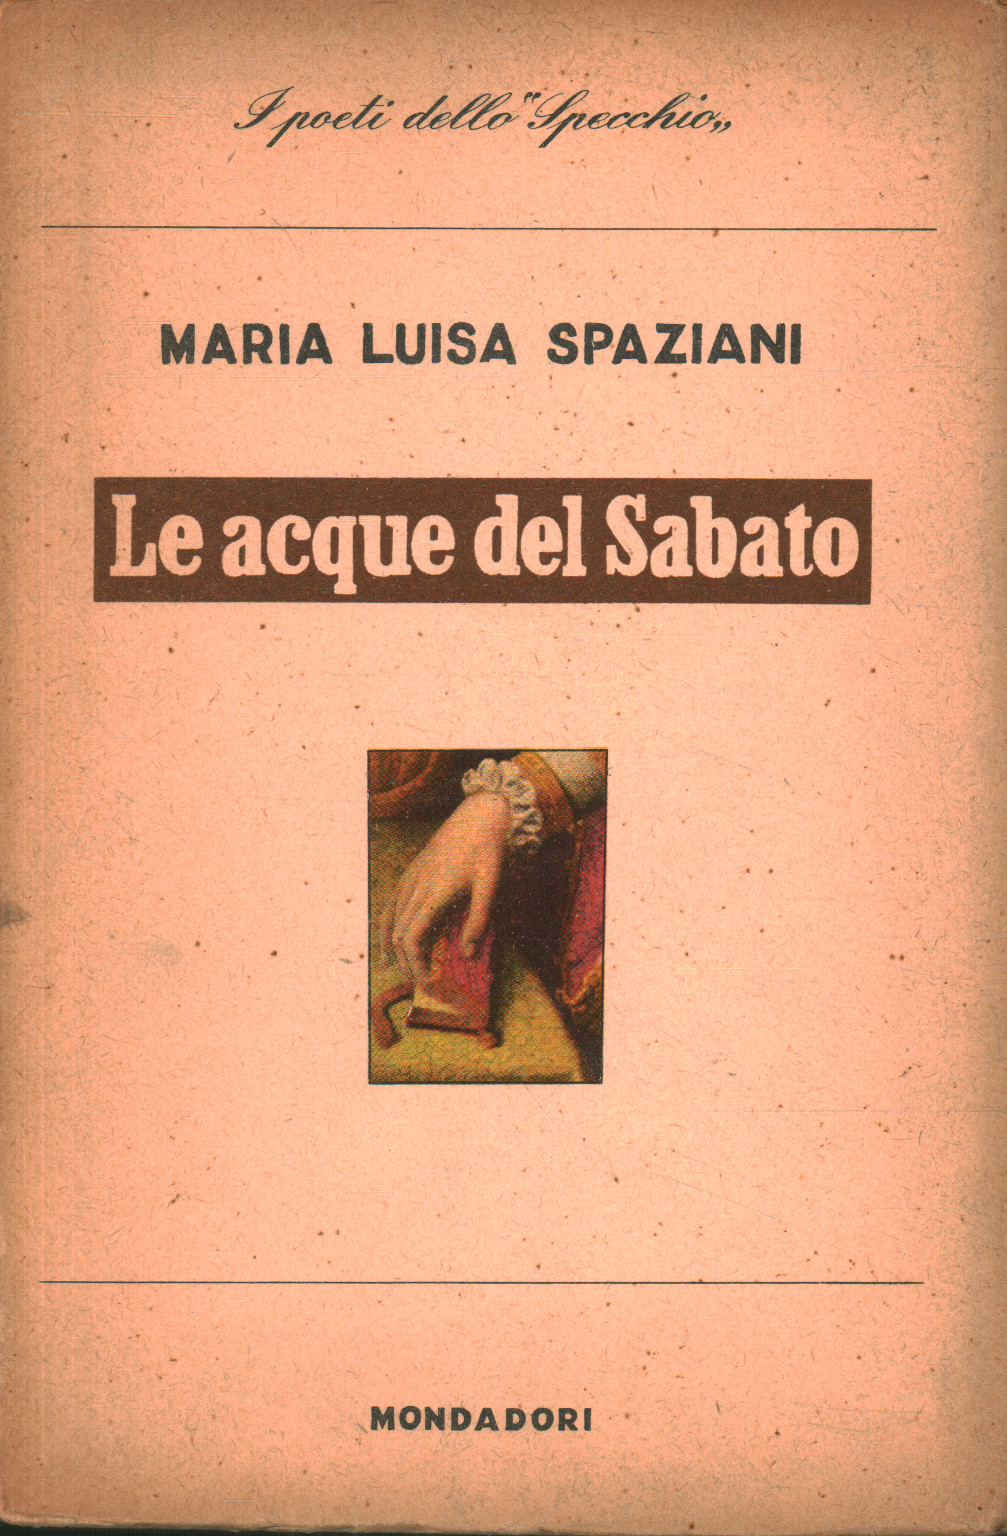 The waters of Saturday, Maria Luisa Spaziani